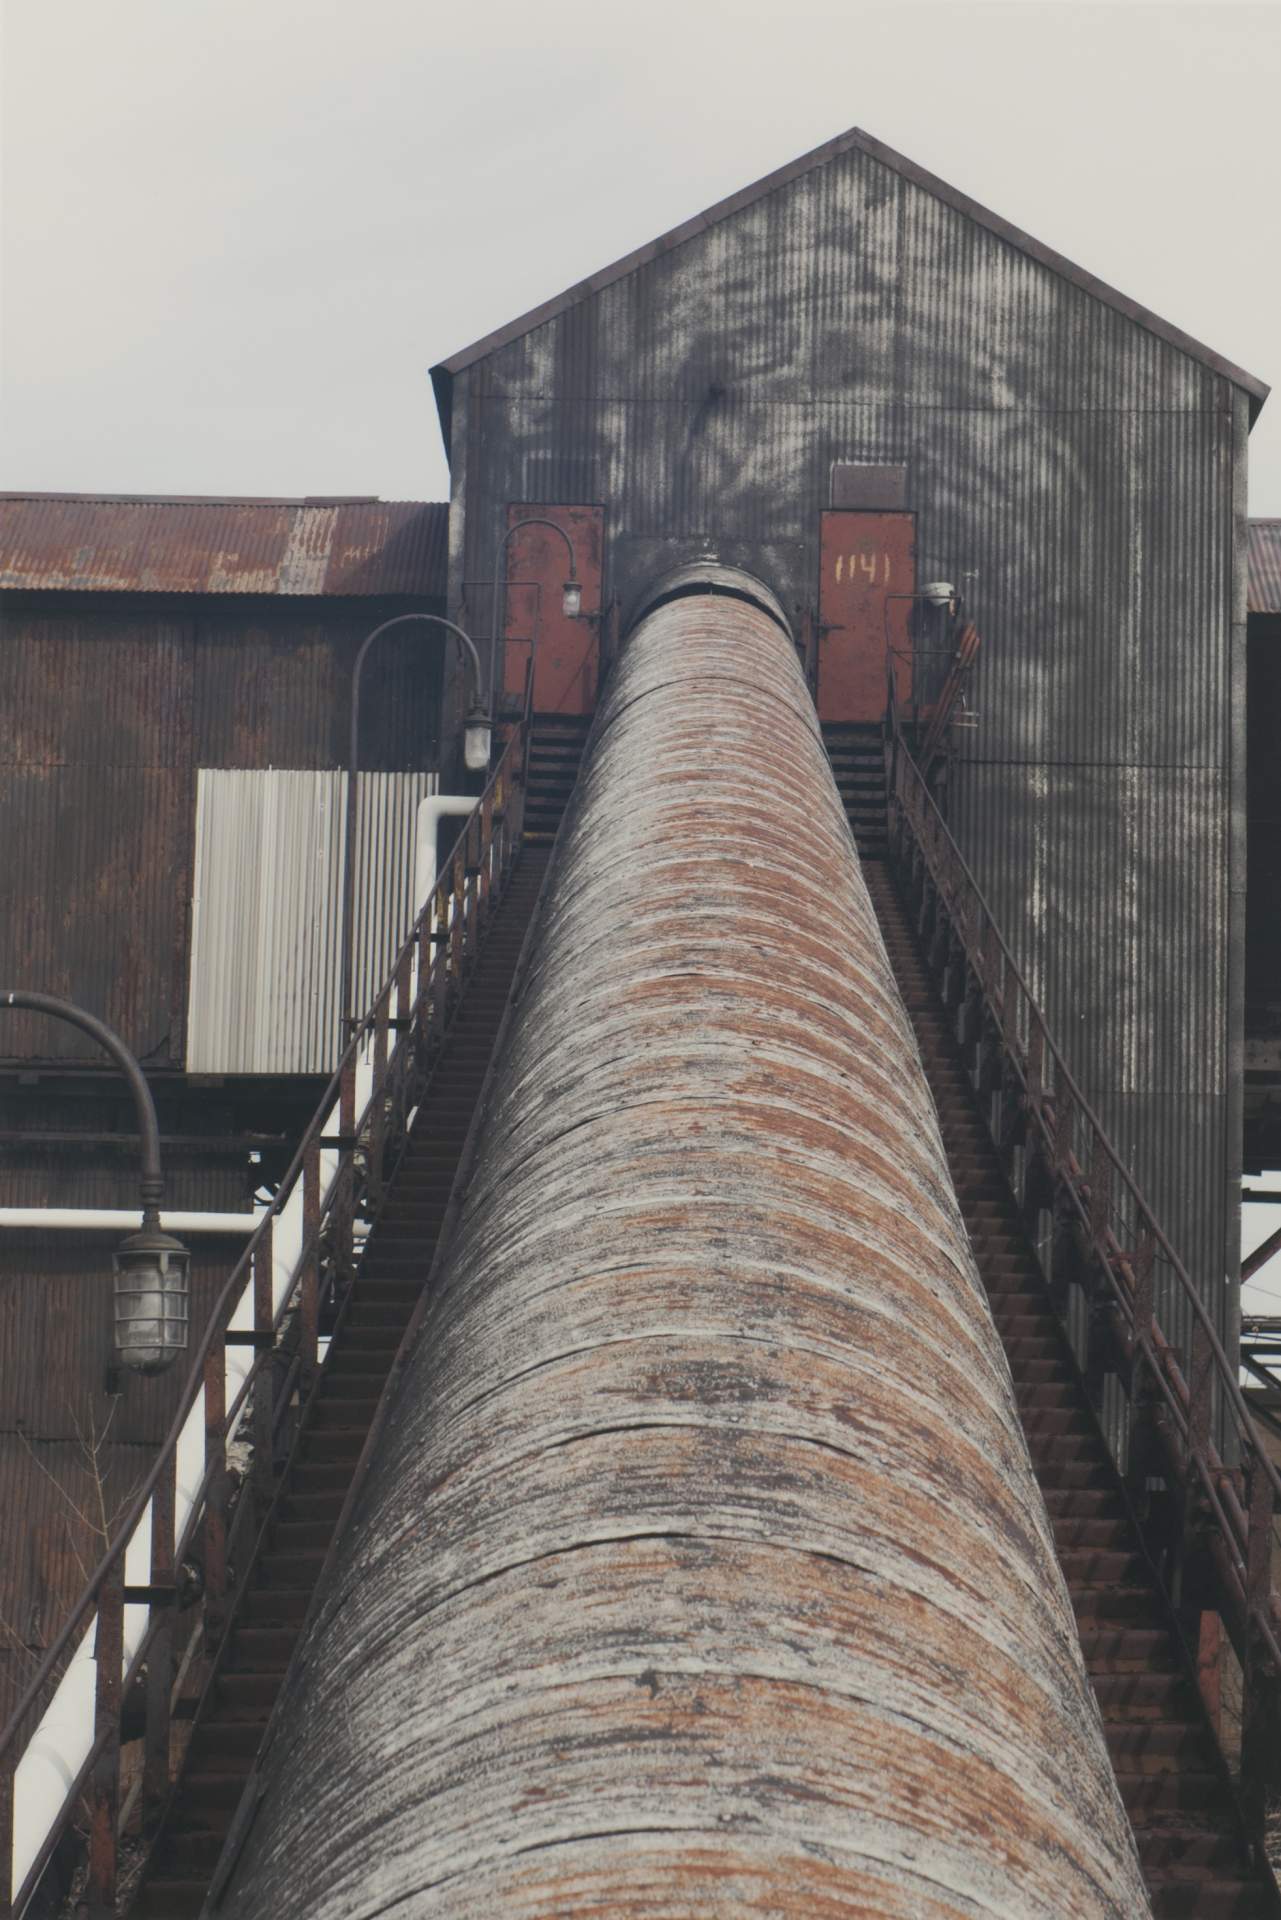 Lackawanna Steel Coal chute